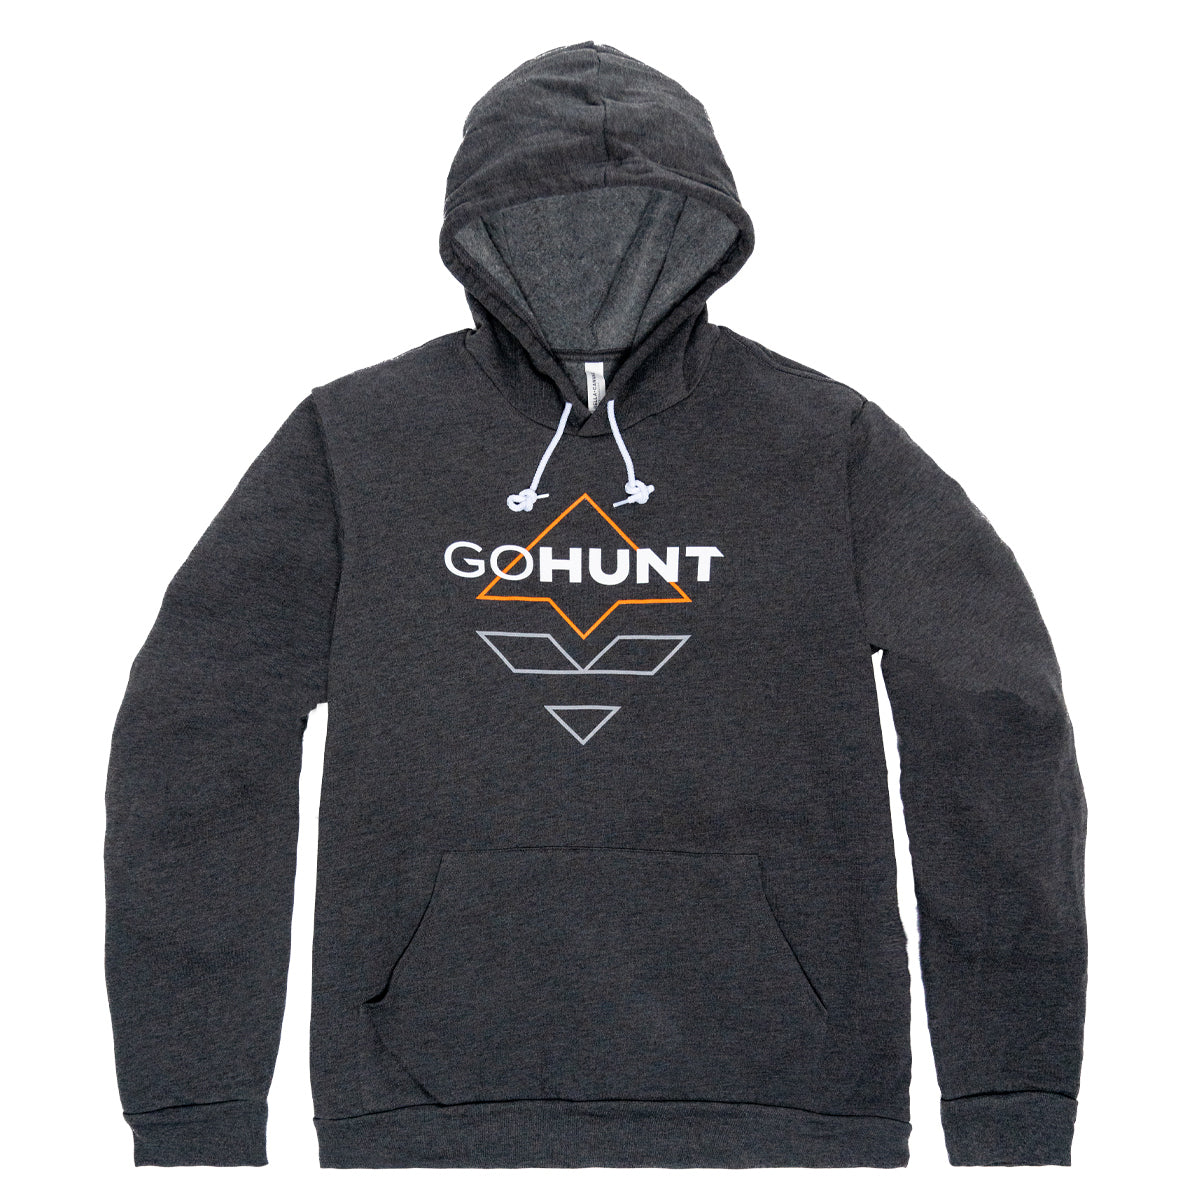 GOHUNT Logo Hoodie in Dark Gray Heather by GOHUNT | GOHUNT - GOHUNT Shop